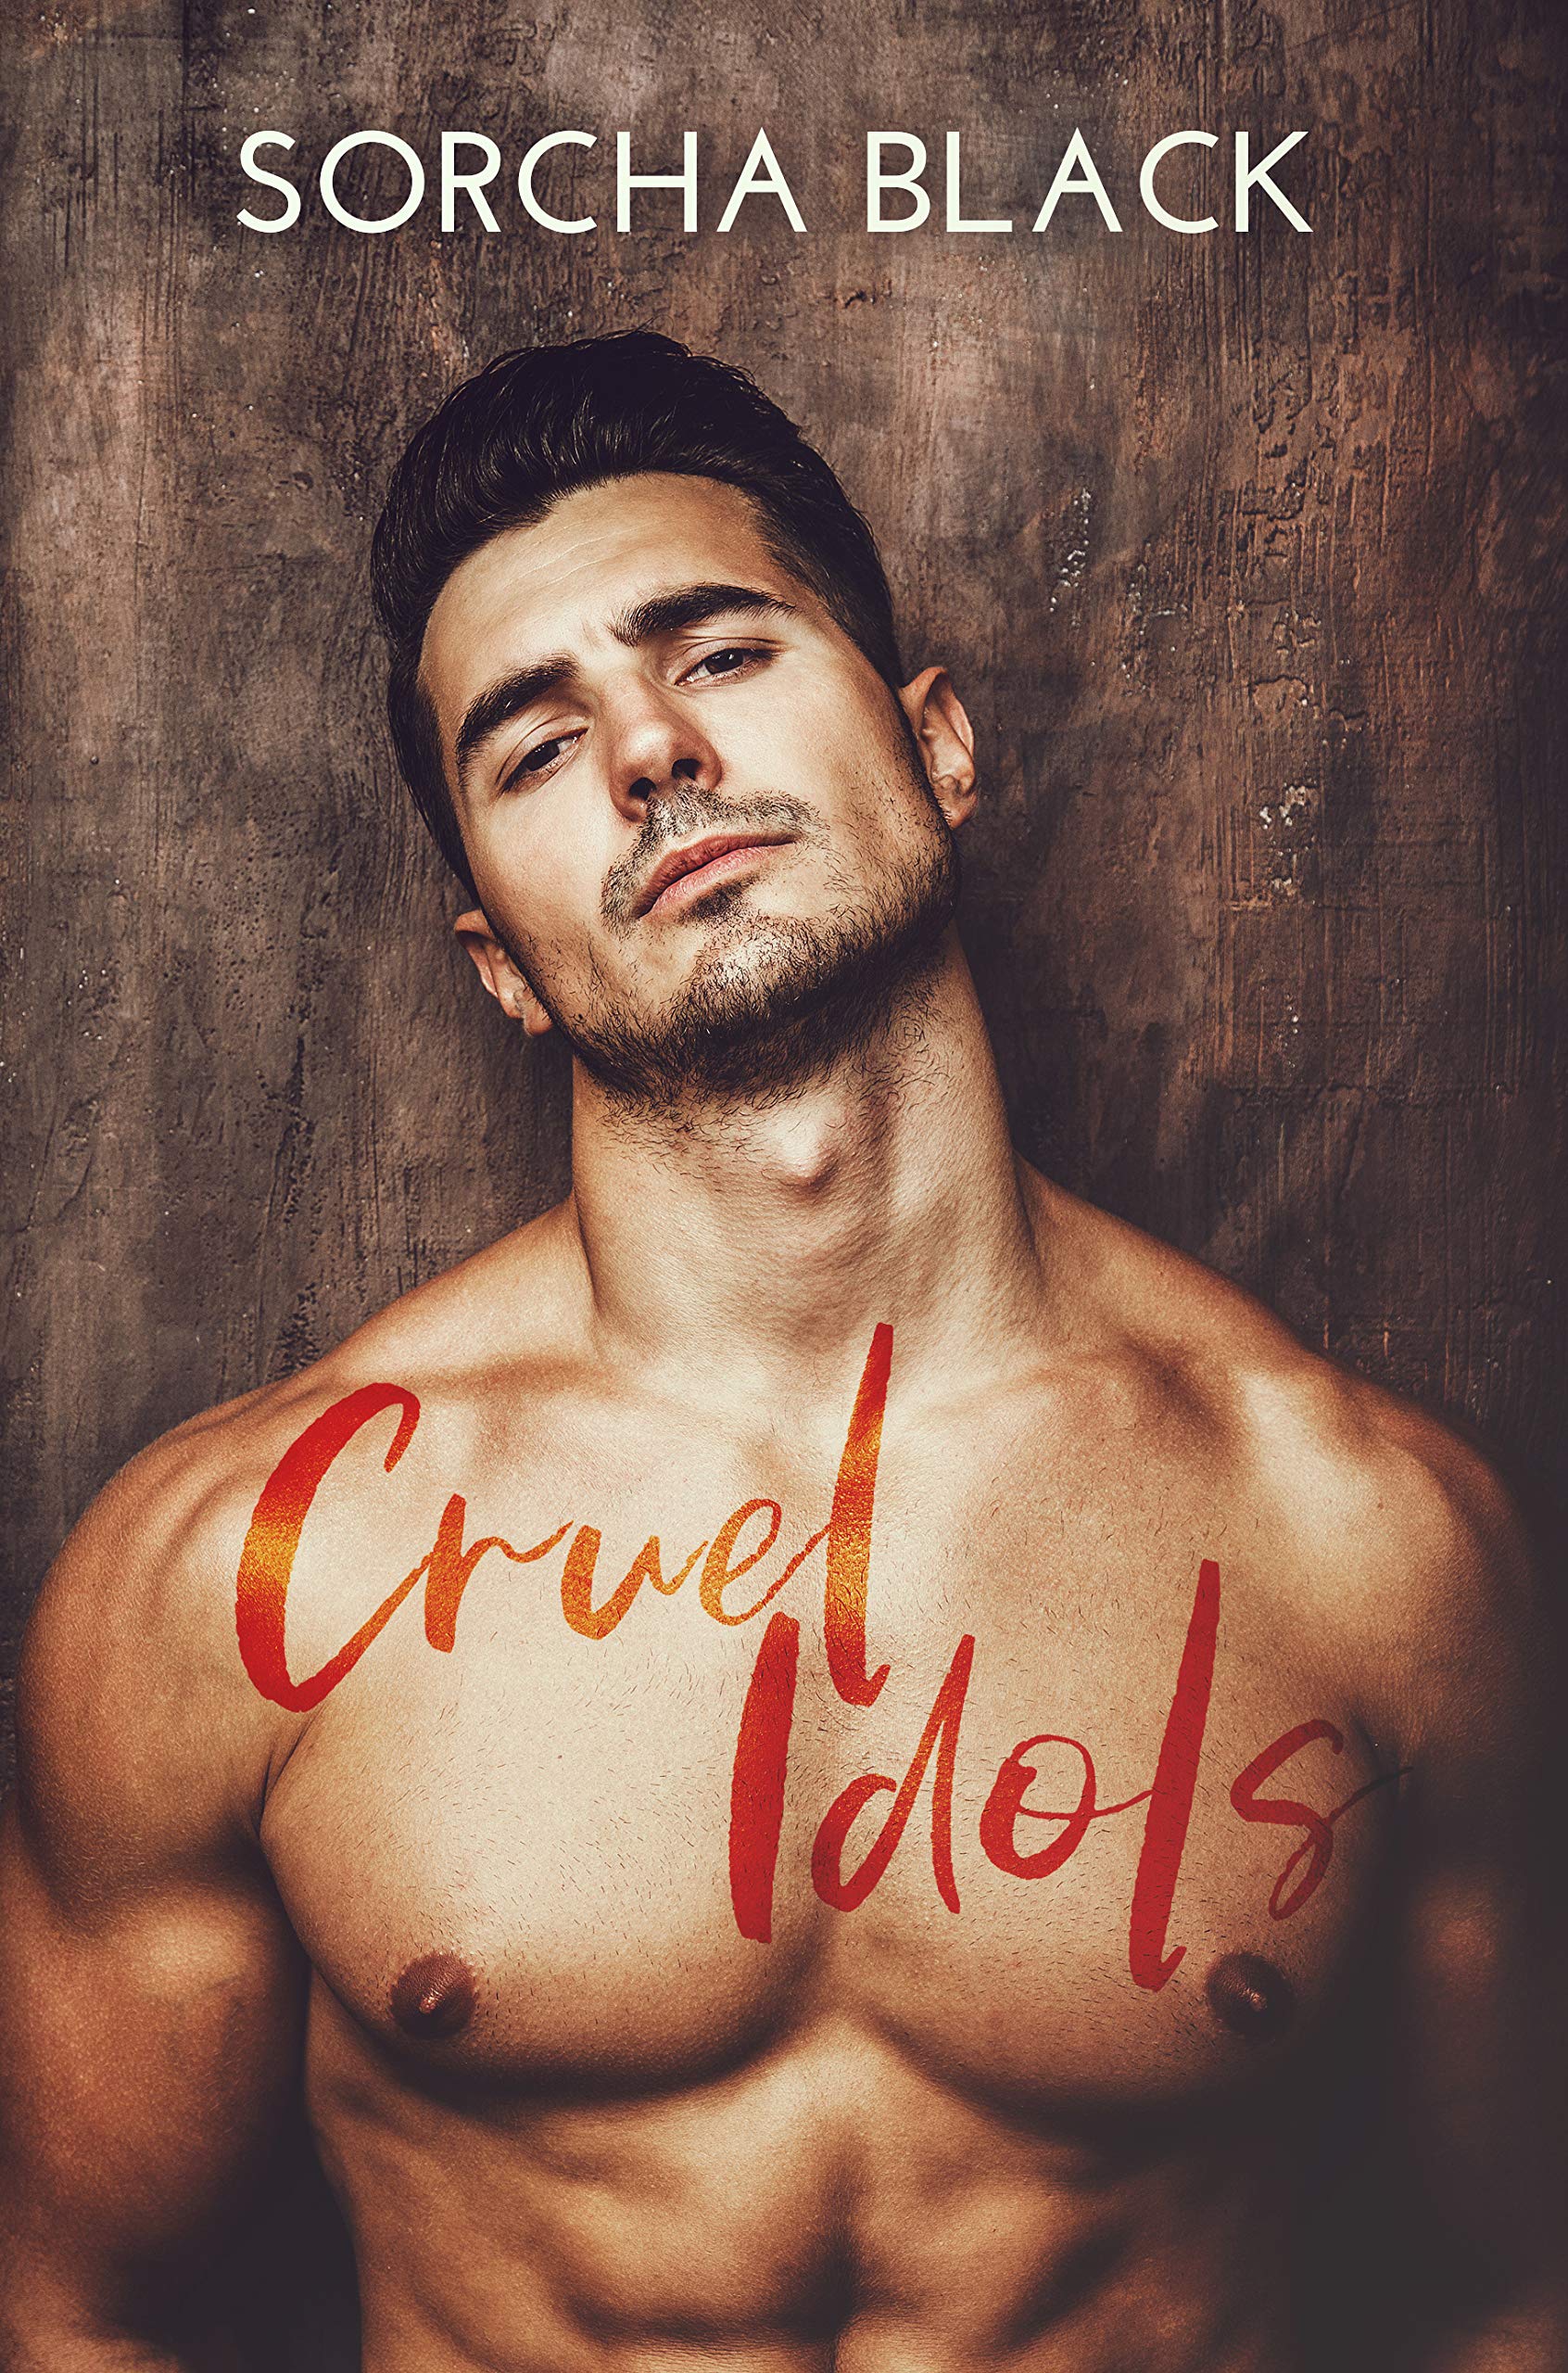 Cover of Cruel Idols by Sorcha Black